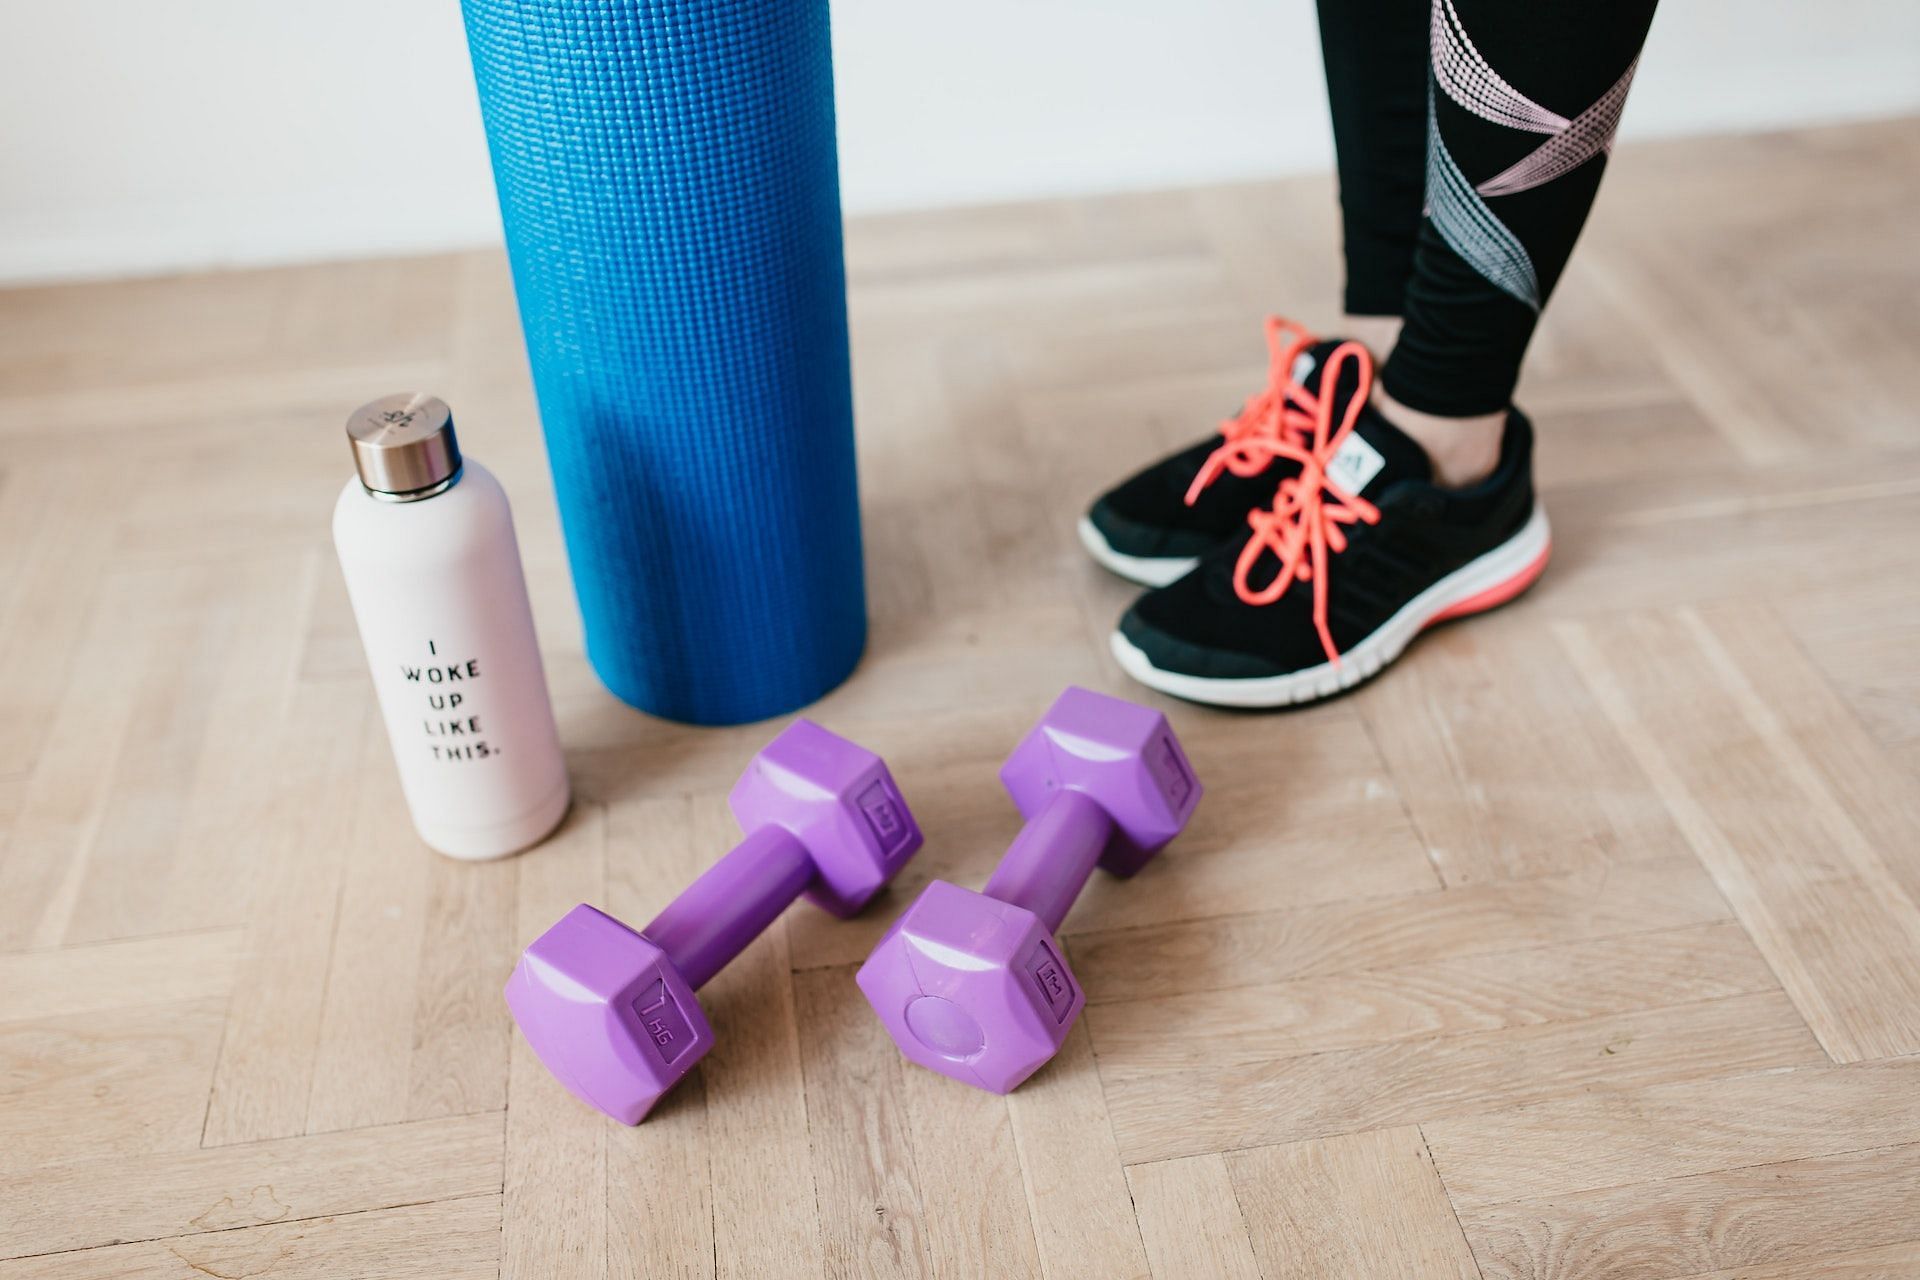 Dumbbell leg exercises are a great way to train your legs at home. (Photo via Pexels/Karolina Grabowska)